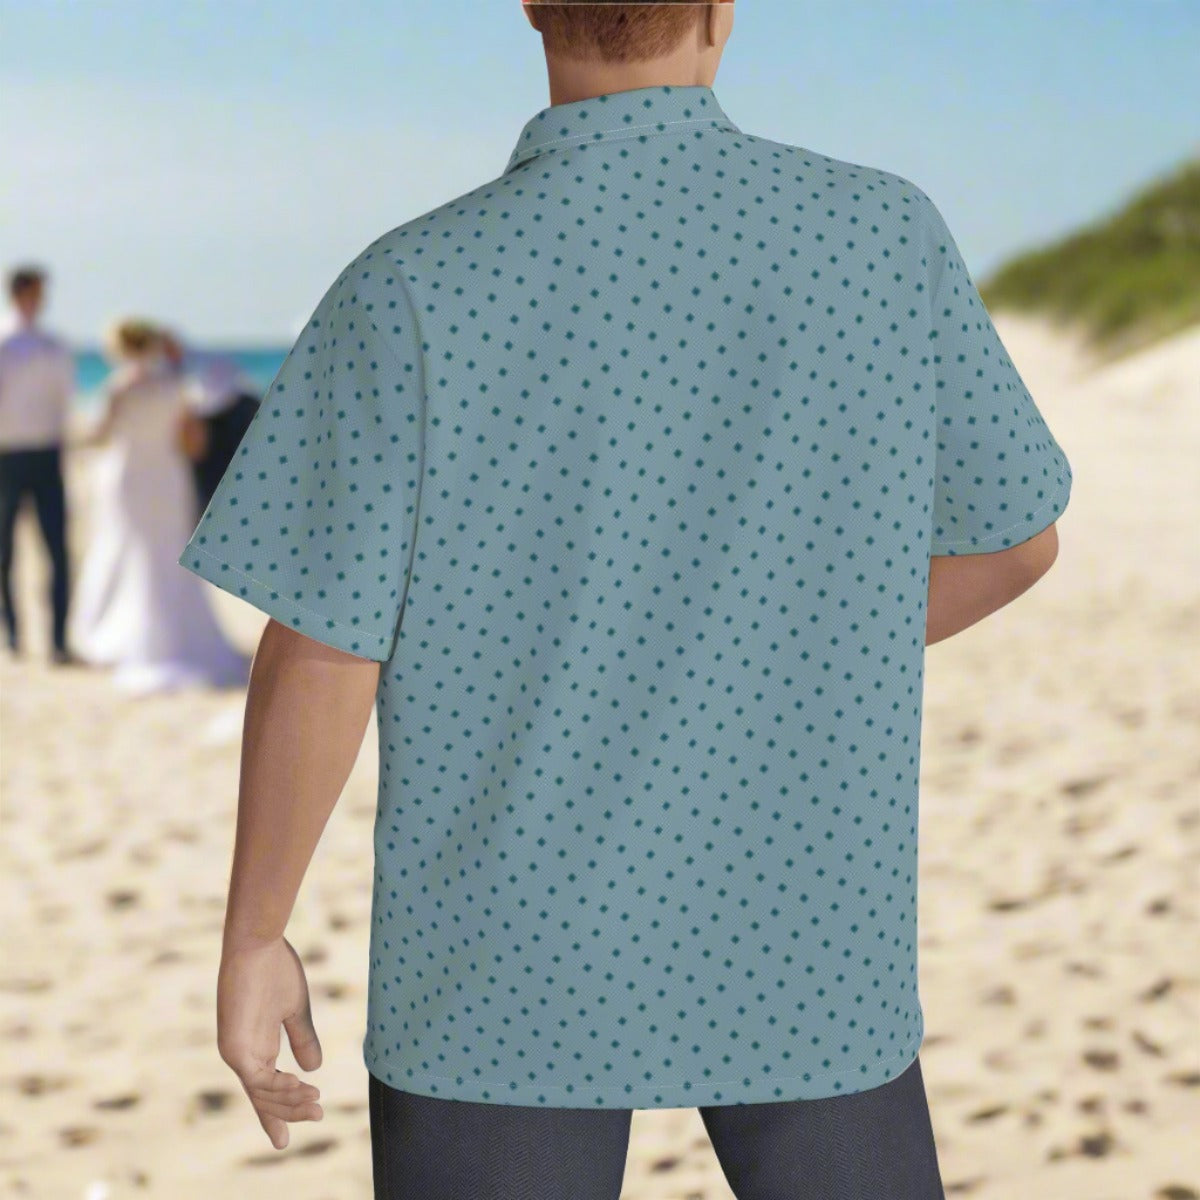 Men's Dot Motif Shirt - Plus Size up to 6XL